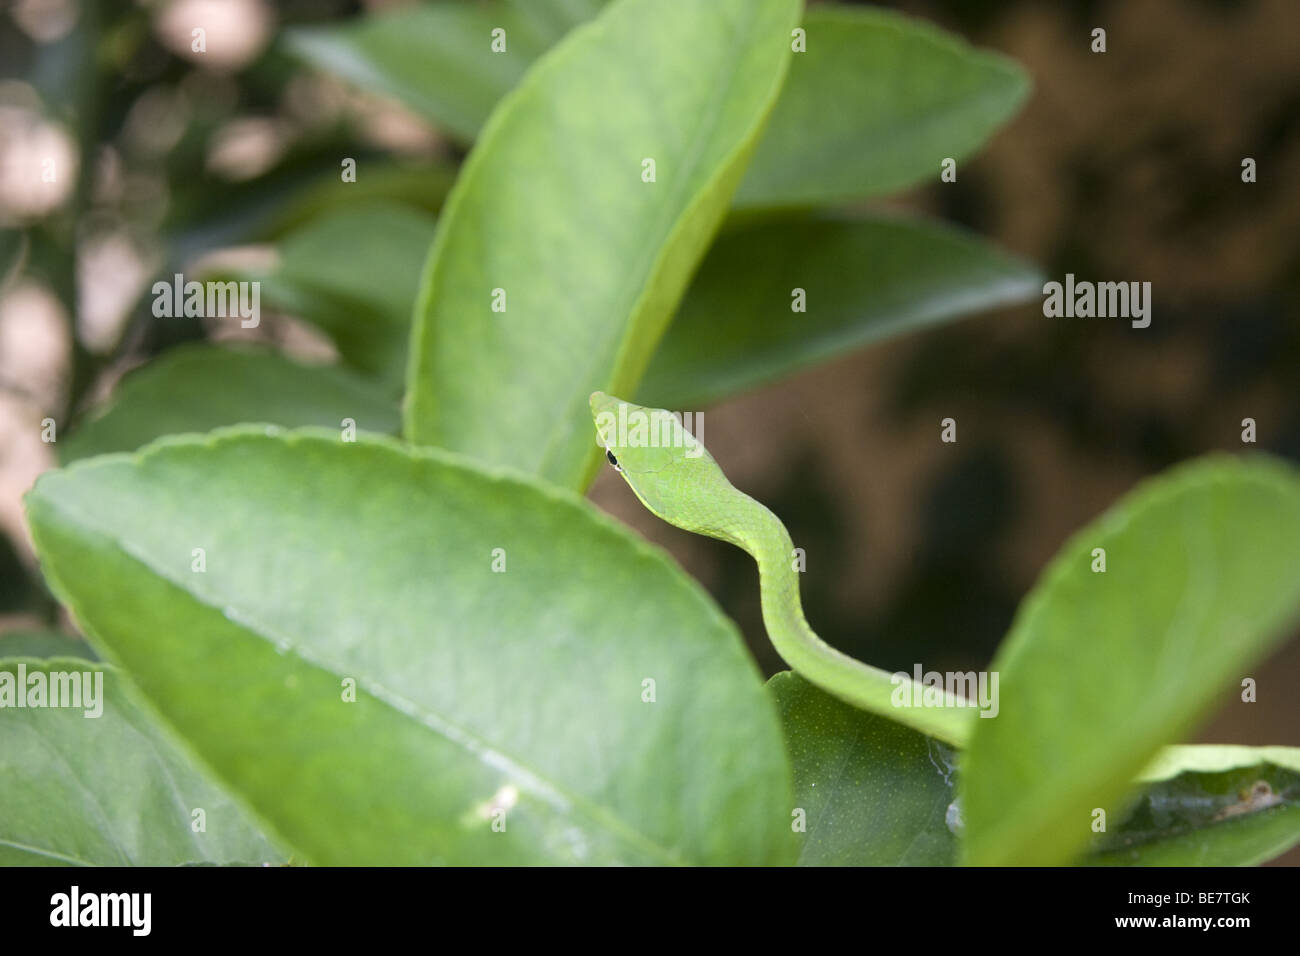 Oxibelis fulgidus, green vine snake on a lime tree. Republic of Panama, Central America Stock Photo